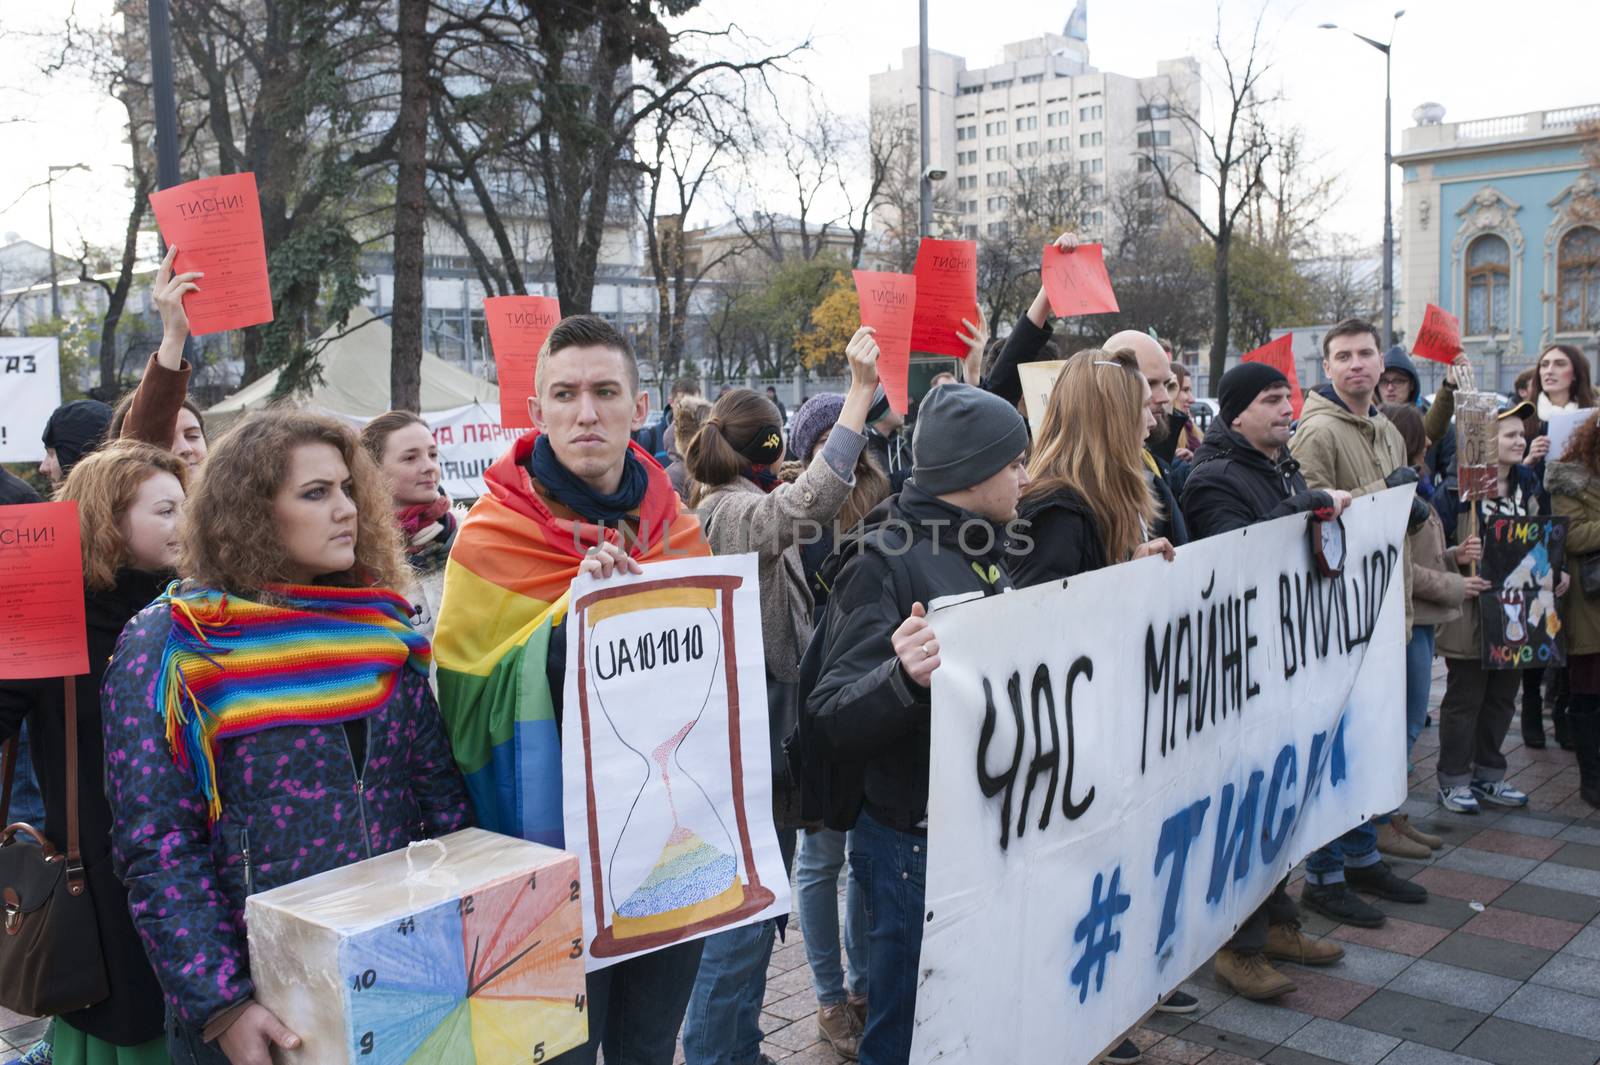 UKRAINE-KIEV-DEMO-LGBT by newzulu